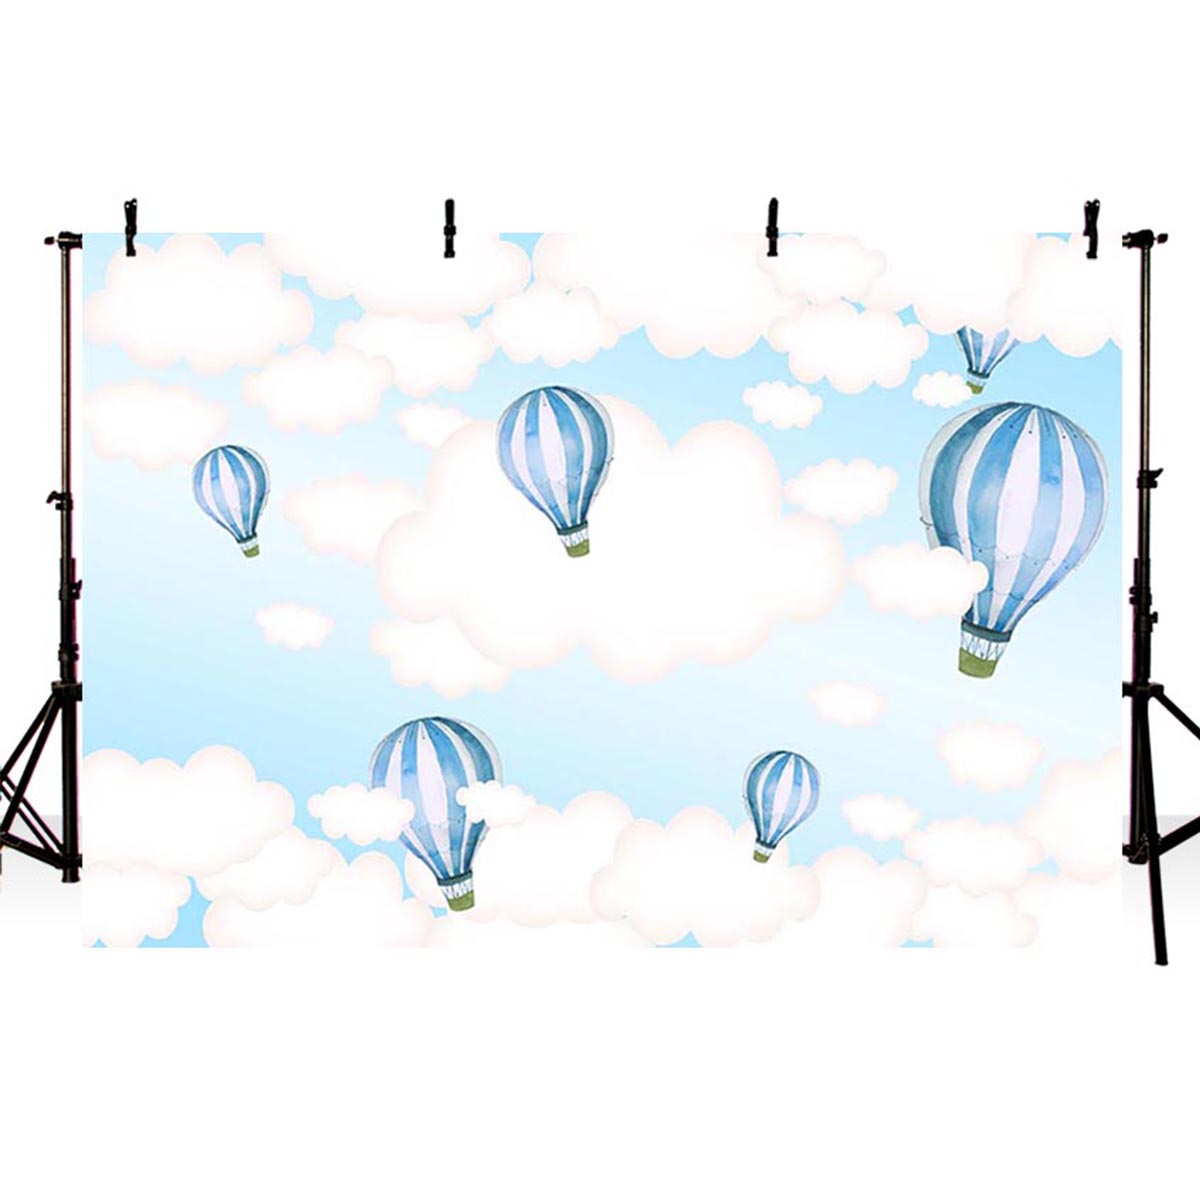 

5x3FT 7x5FT 9x6FT Sky White Cloud Balloon Photography Backdrop Background Studio Prop - 0.9x1.5m